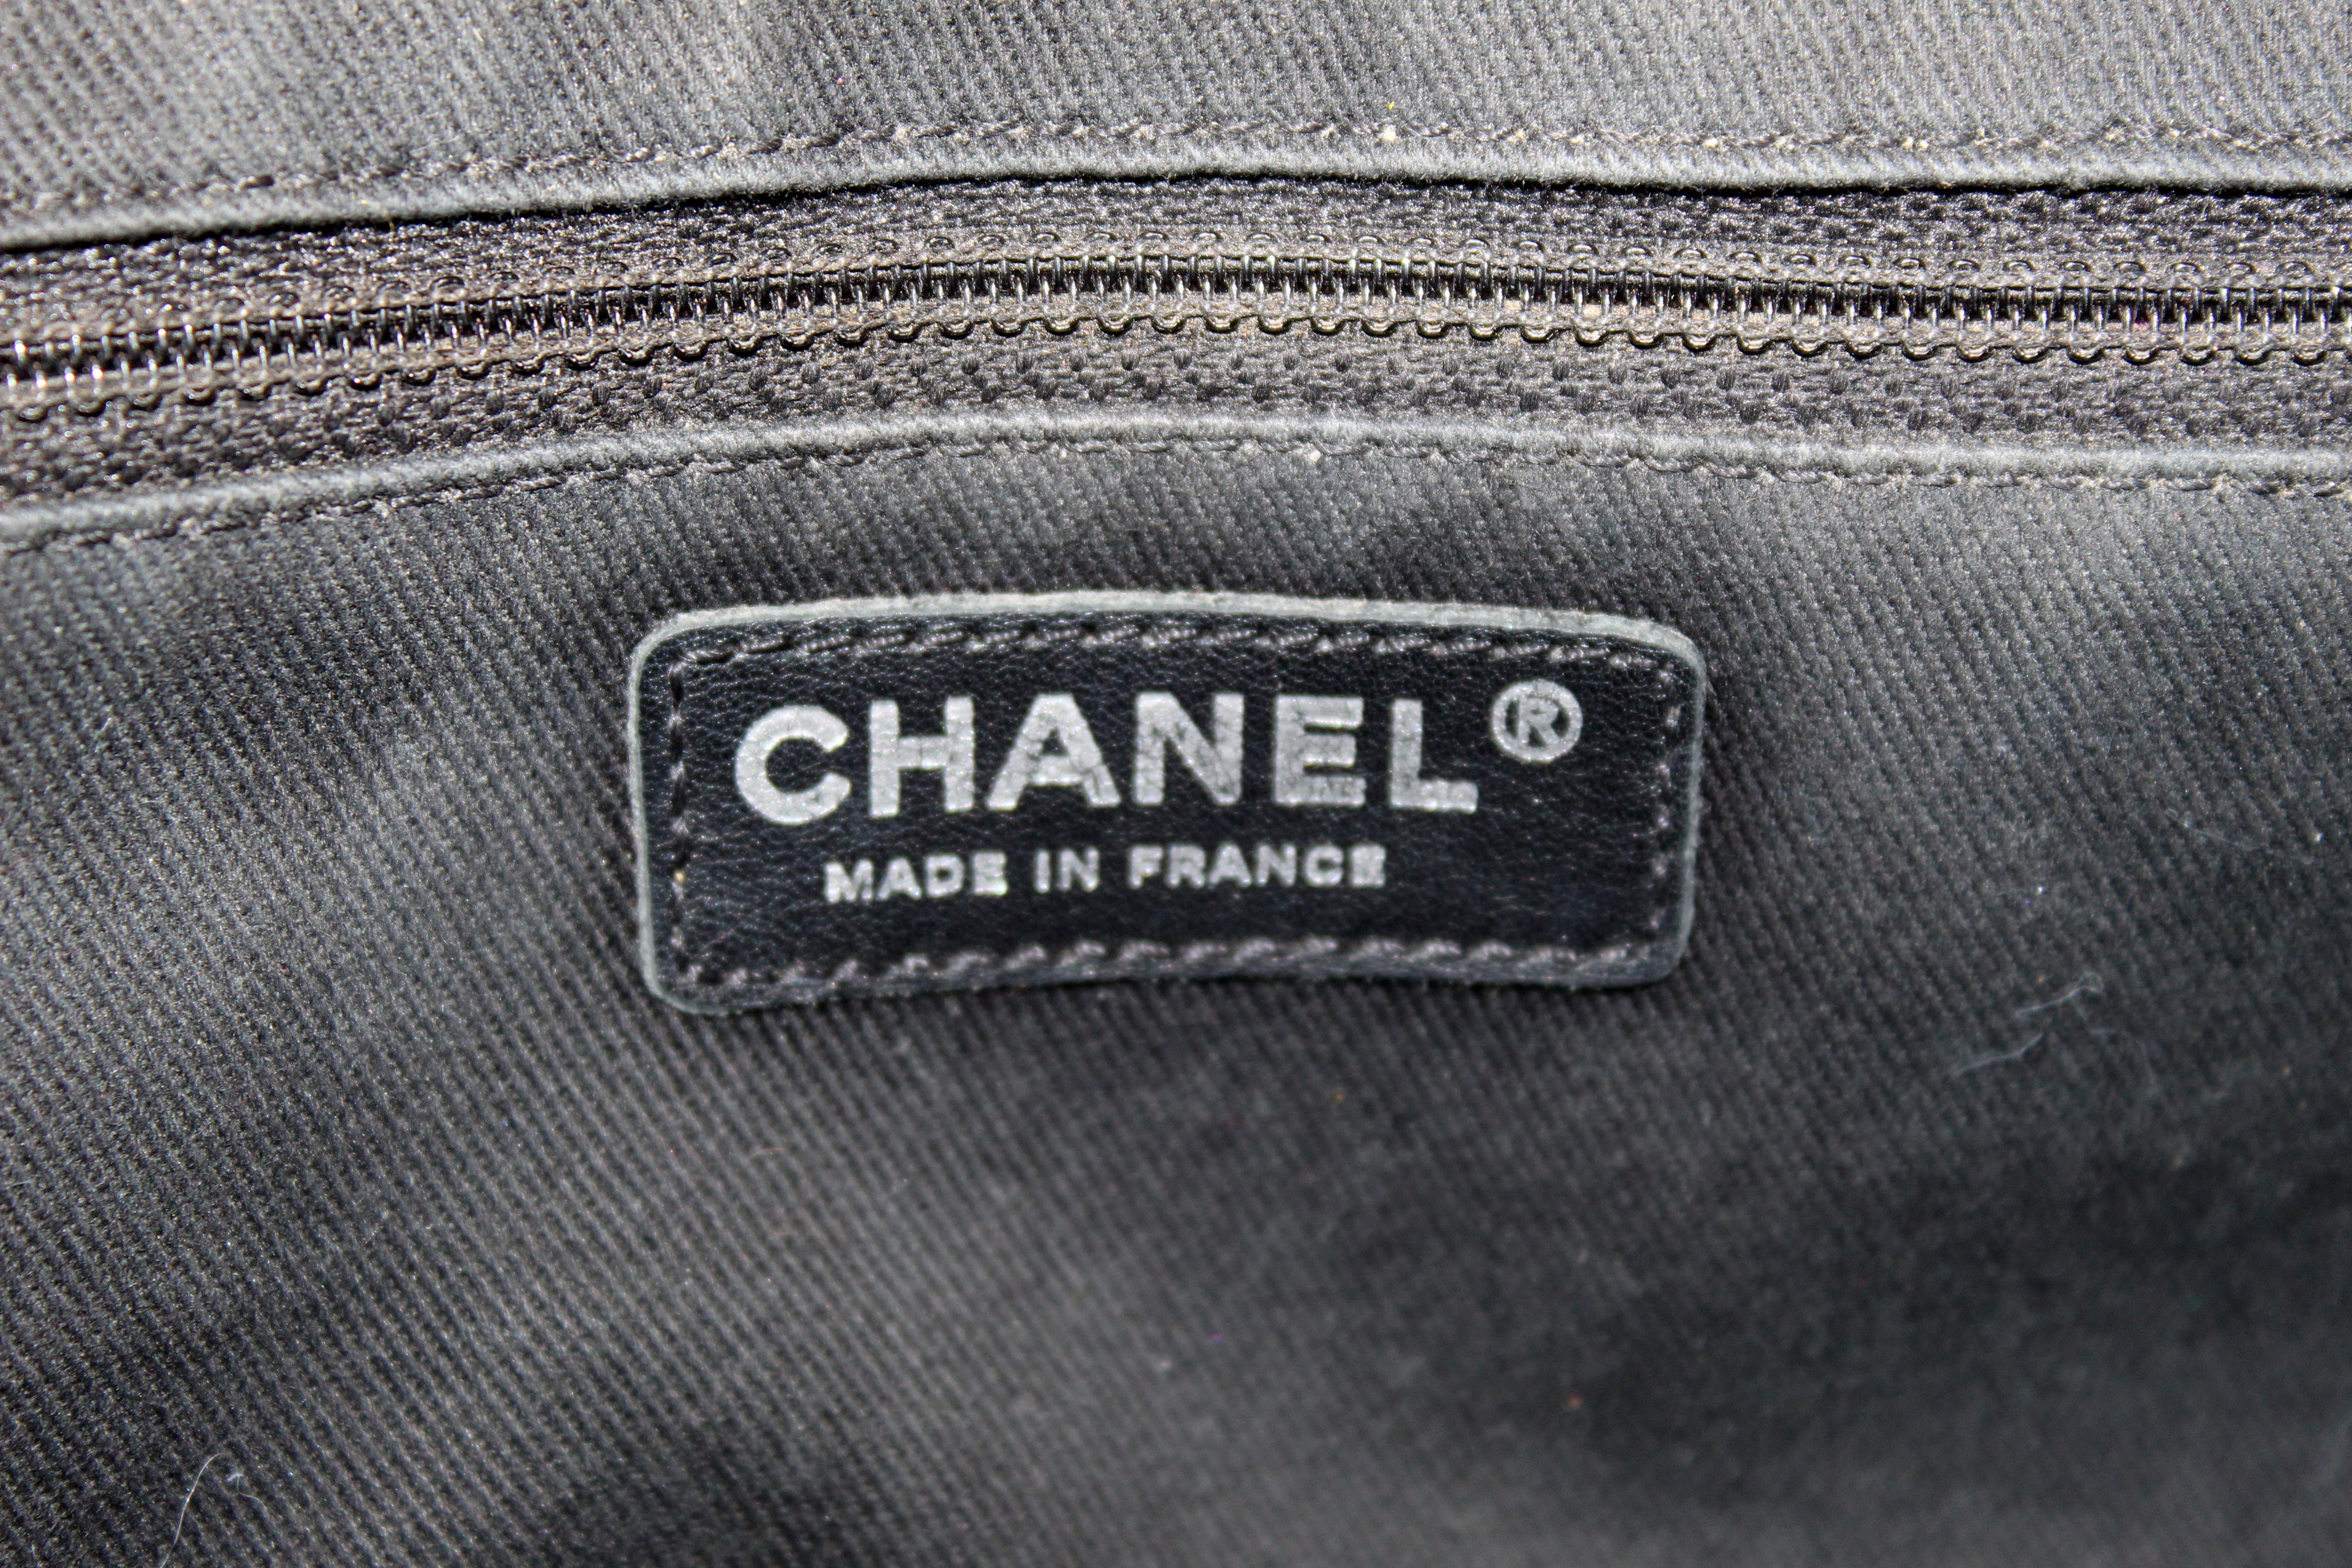 Chanel Black Caviar Leather Half Moon Hobo Bag with Gold Hardware., Lot  #77009